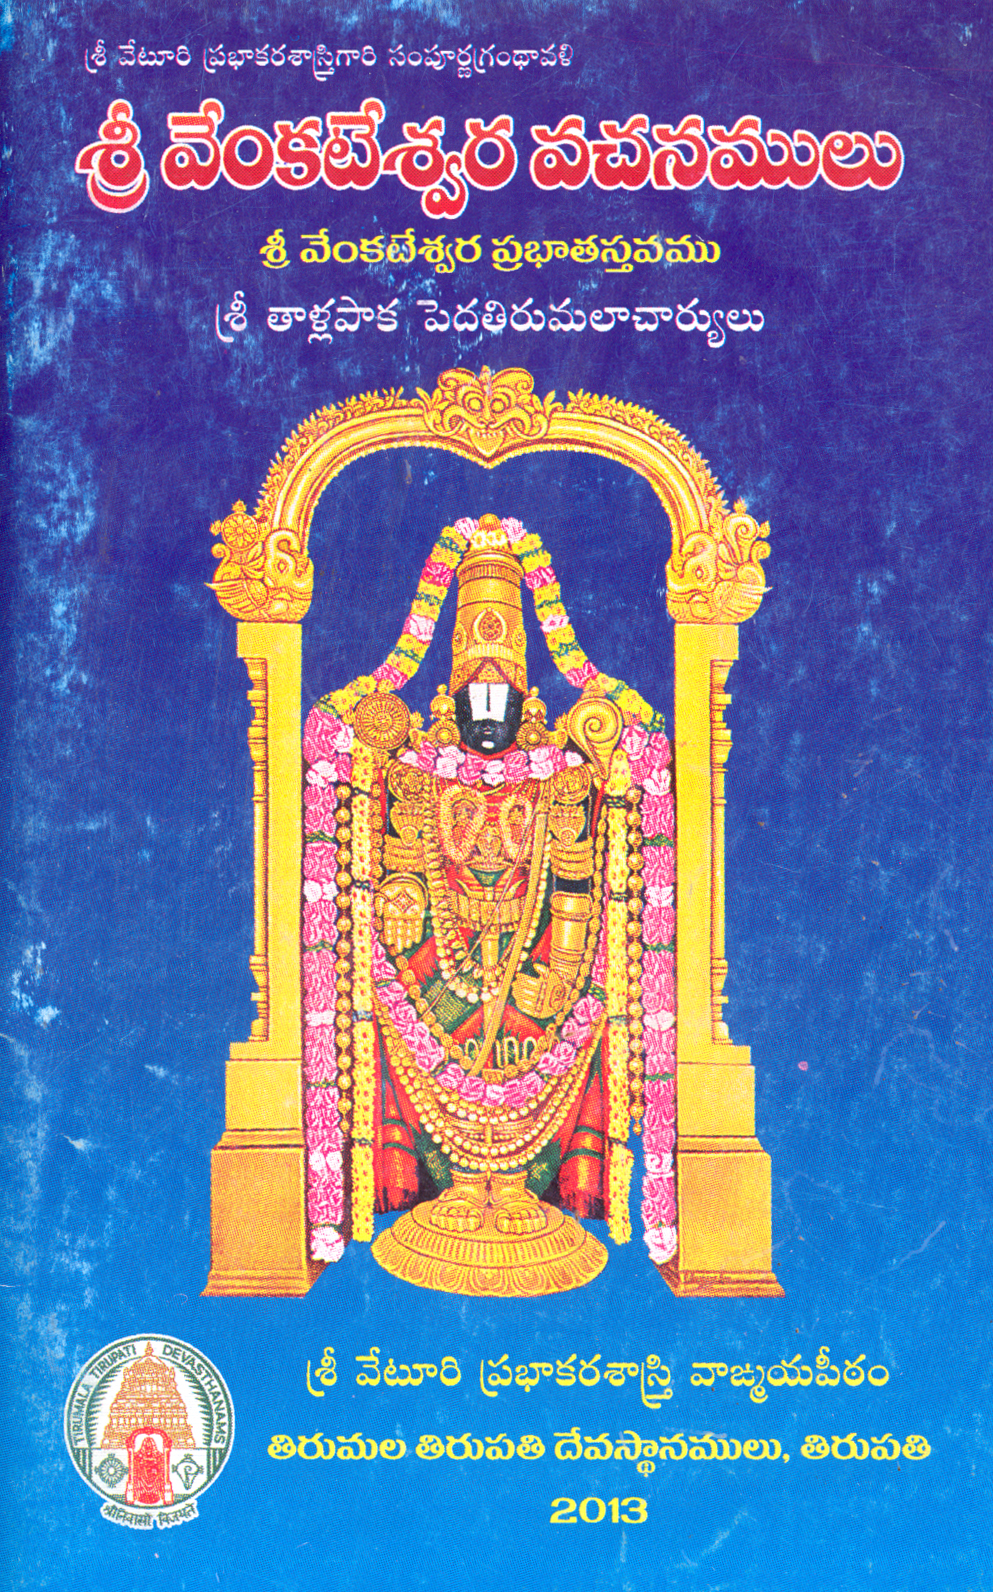 Sri Venkateswara vachanamulu